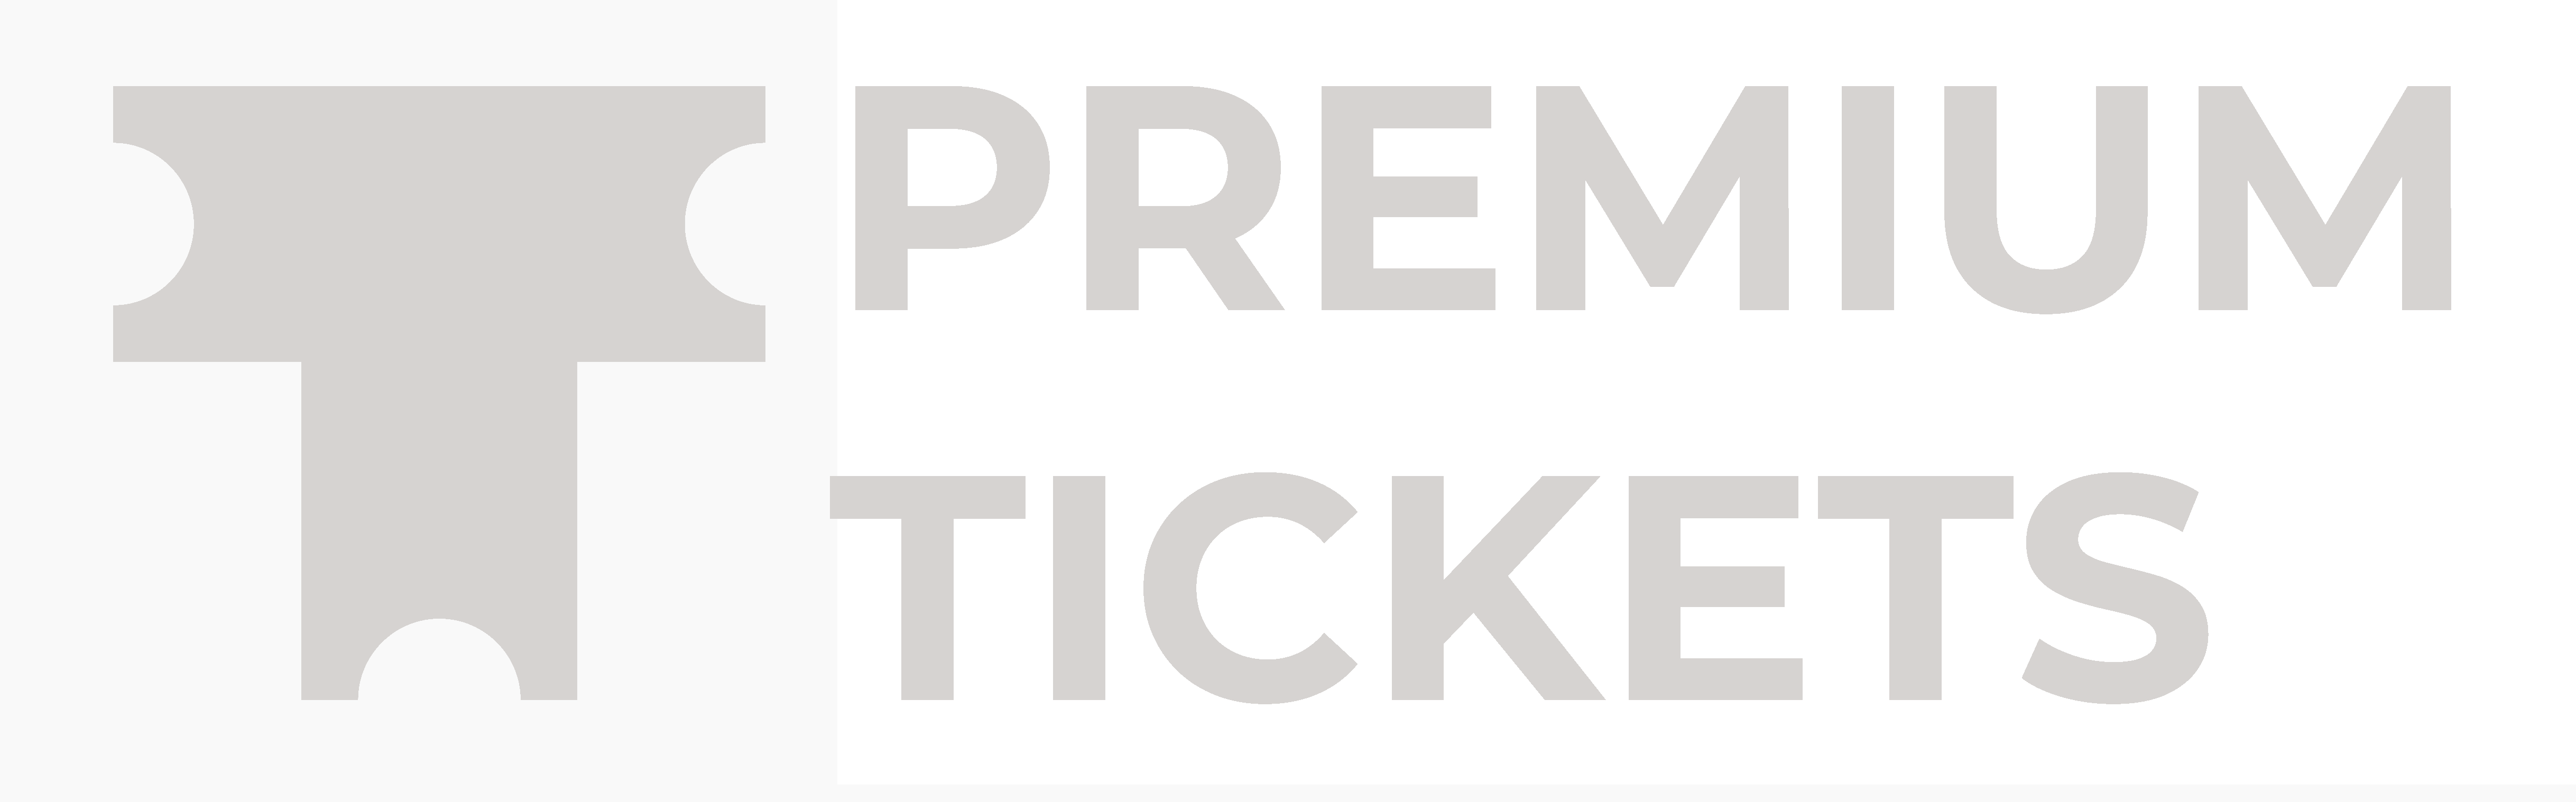 Premium Tickets